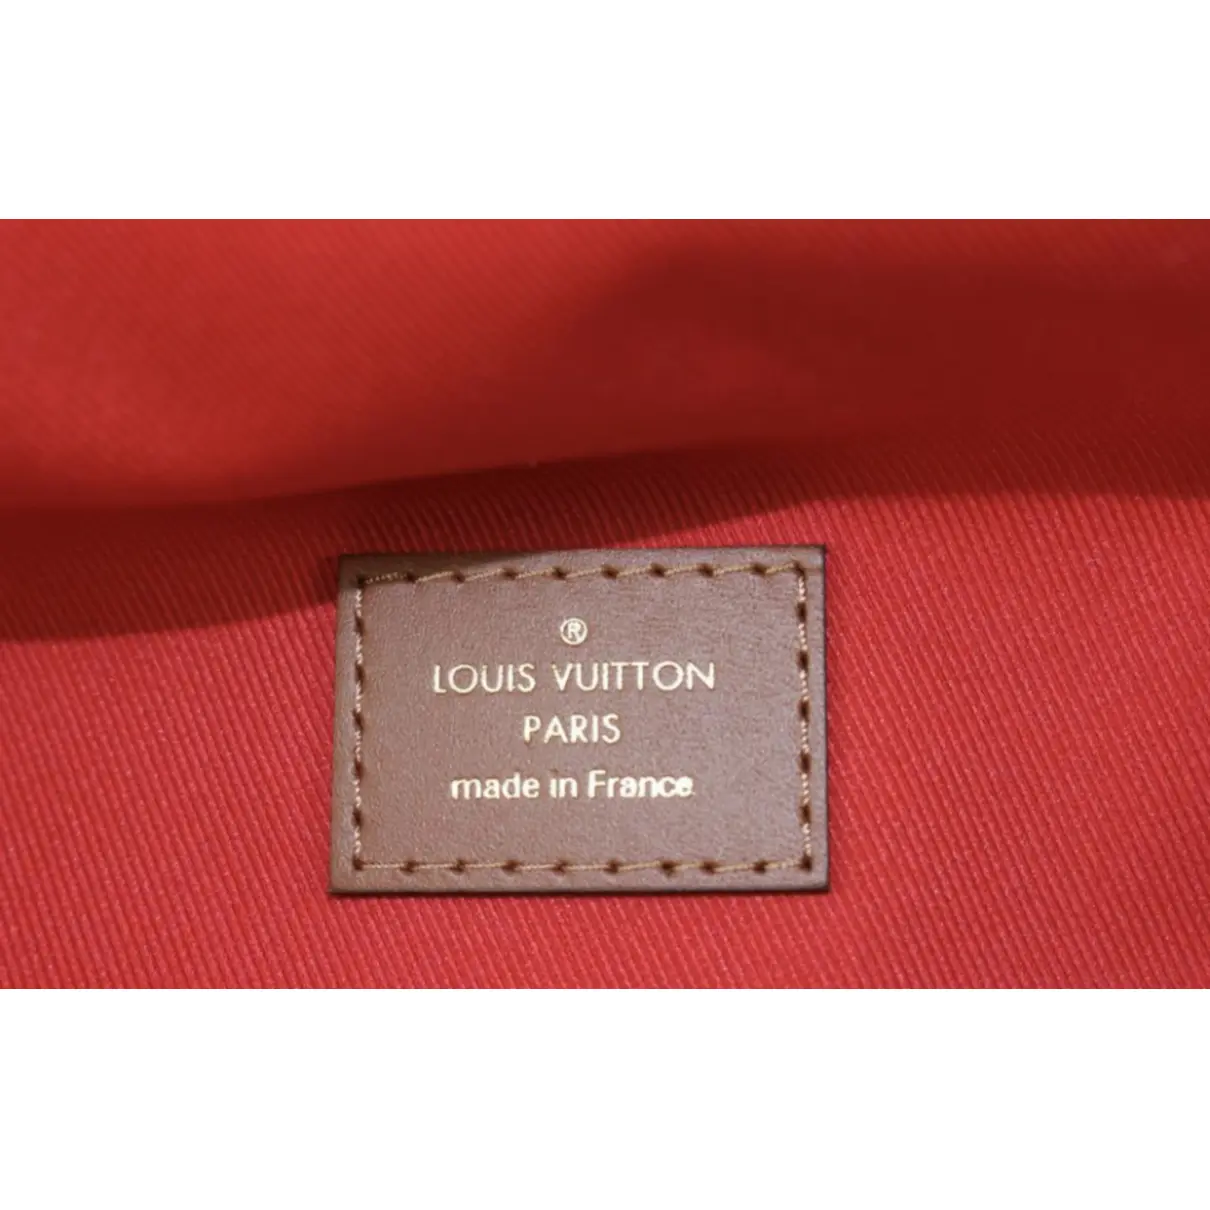 Buy Louis Vuitton Bum Bag / Sac Ceinture wool crossbody bag online